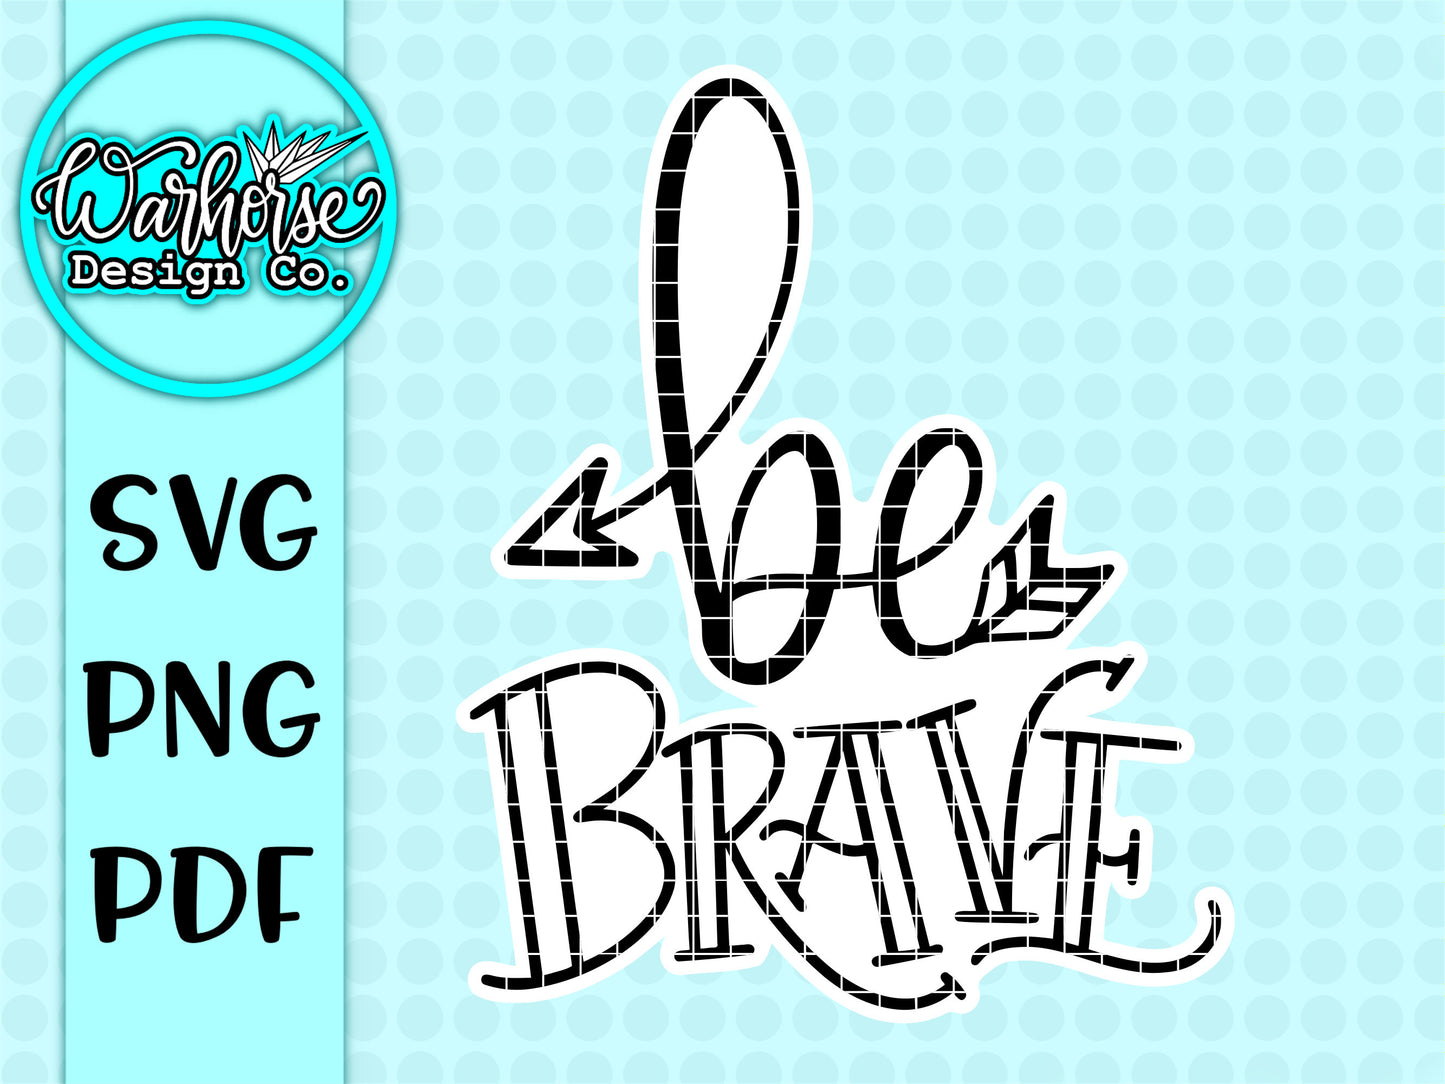 Be Brave SVG PNG PDF